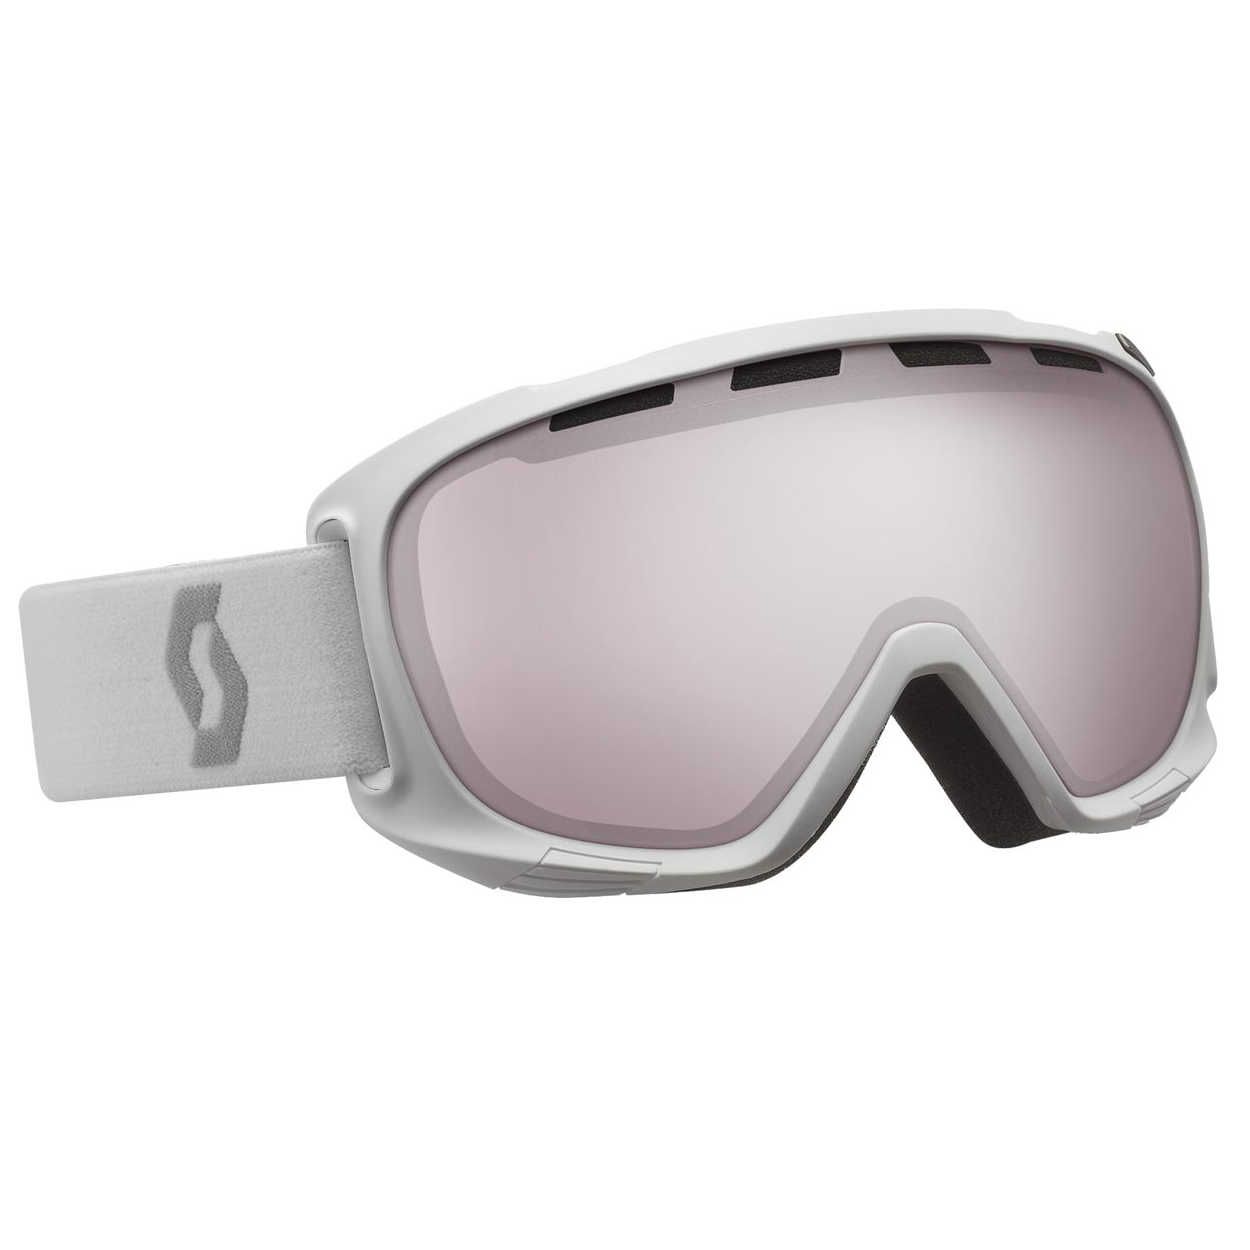 Masque De Ski Fix Std - White Silver Chrome